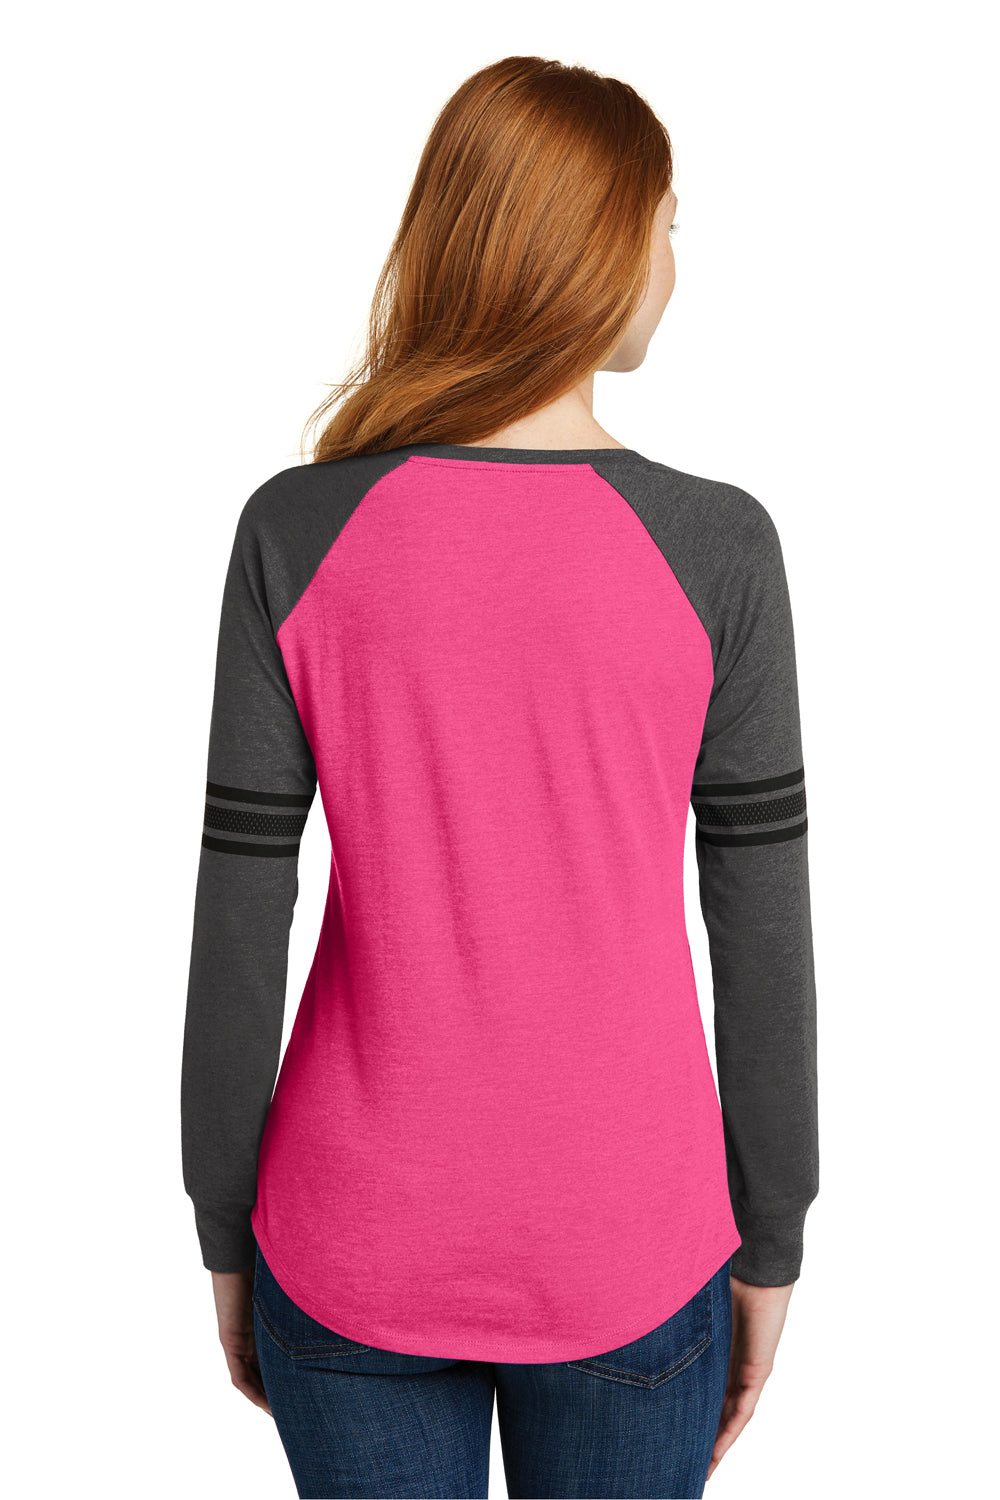 District DM477 Womens Game Long Sleeve V-Neck T-Shirt Heather Fuchsia Pink/Heather Charcoal Grey/Black Back